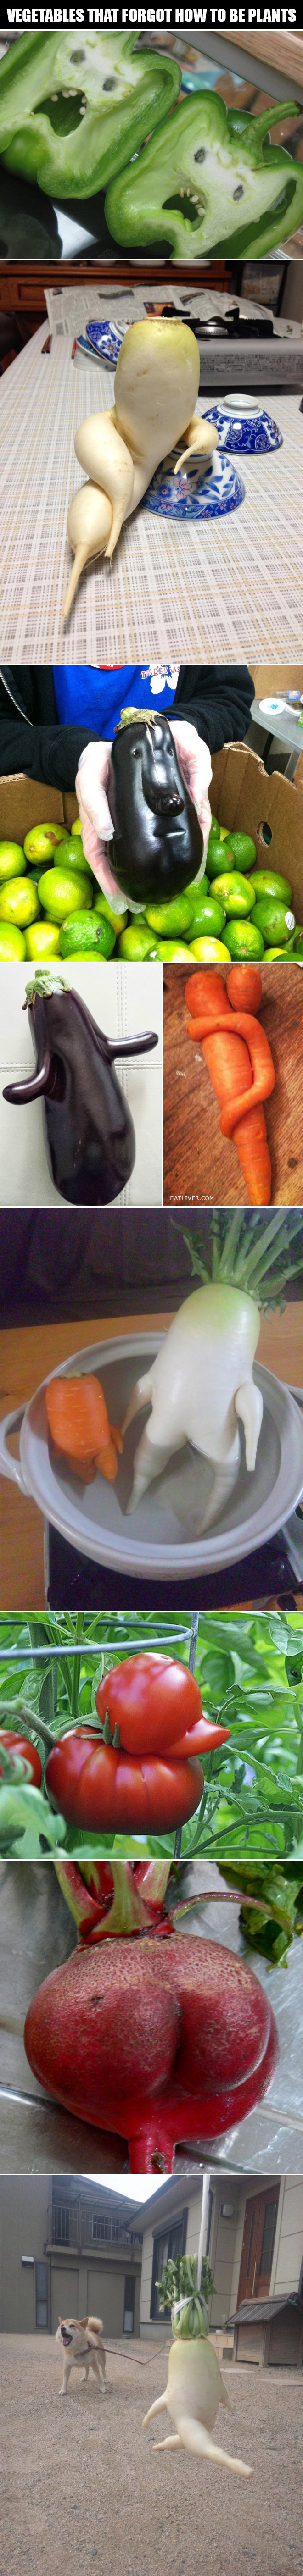 vegetables.jpg